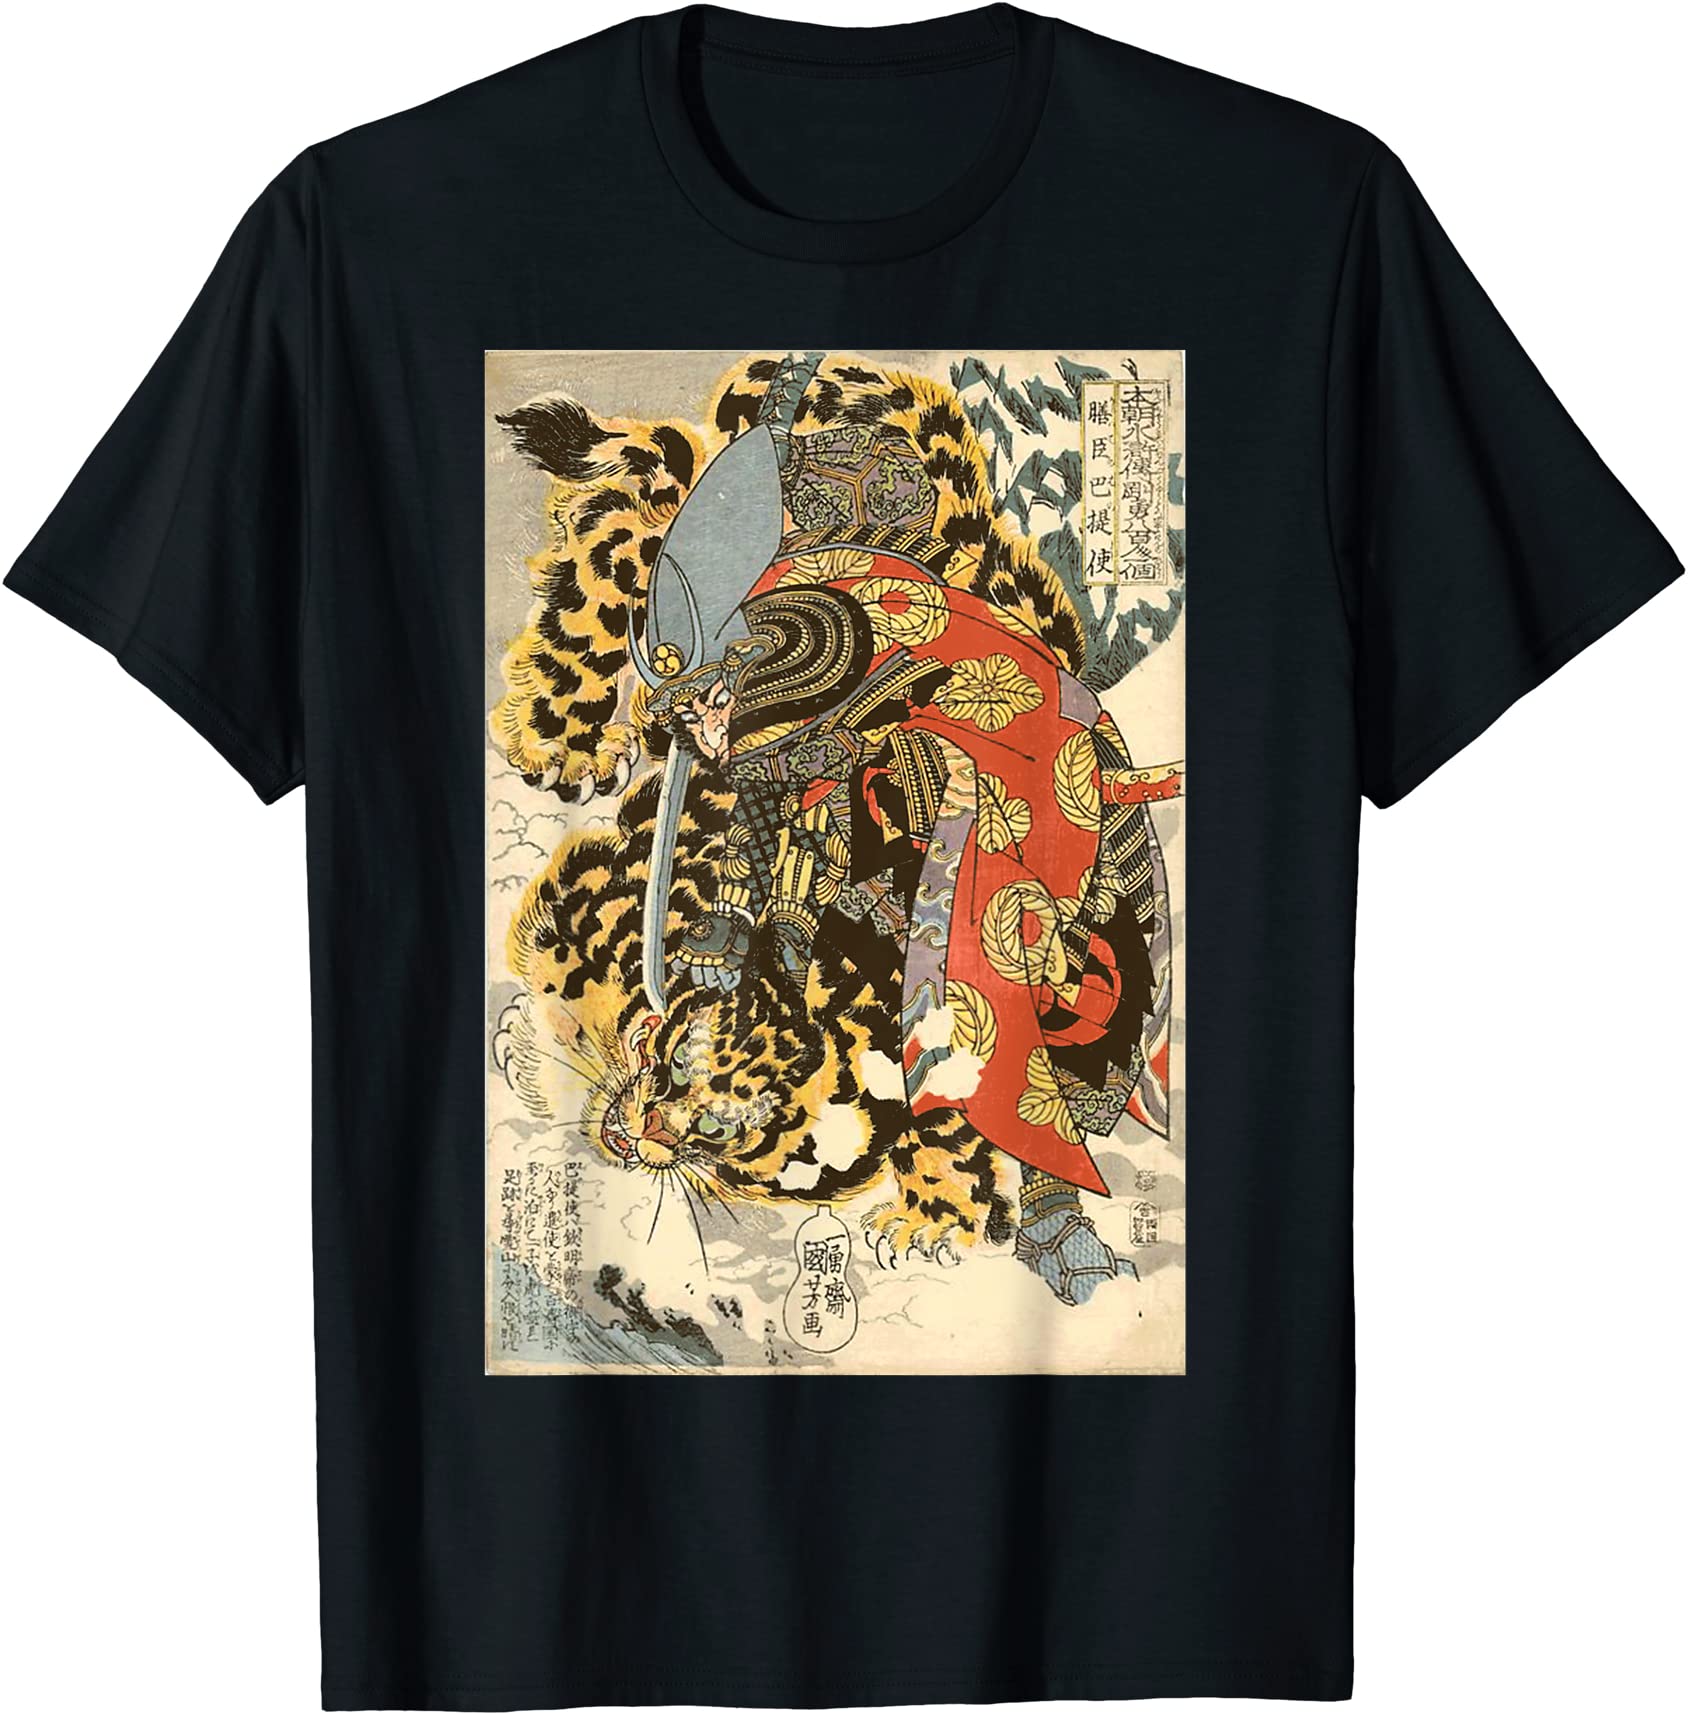 japanese samurai general fighting tiger artwork t shirt men - Buy t ...